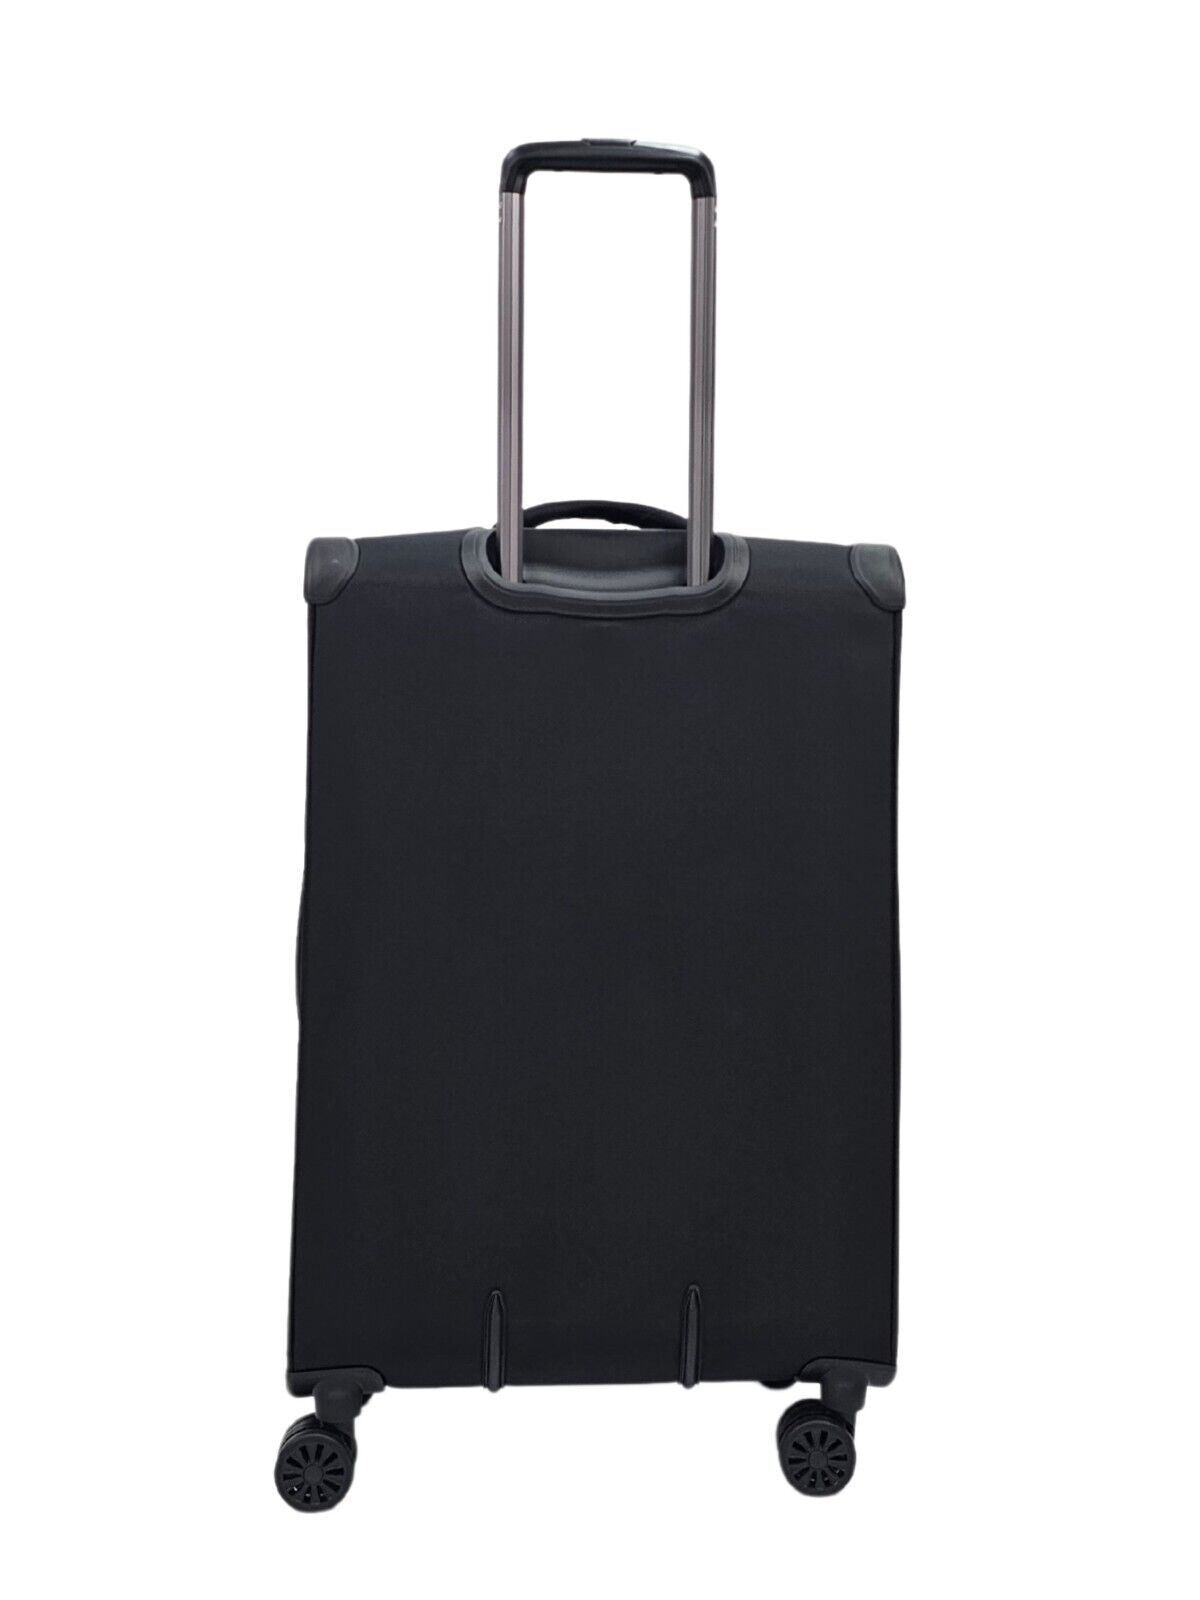 Lightweight Black Suitcases 4 Wheel Luggage Travel Cabin Bag